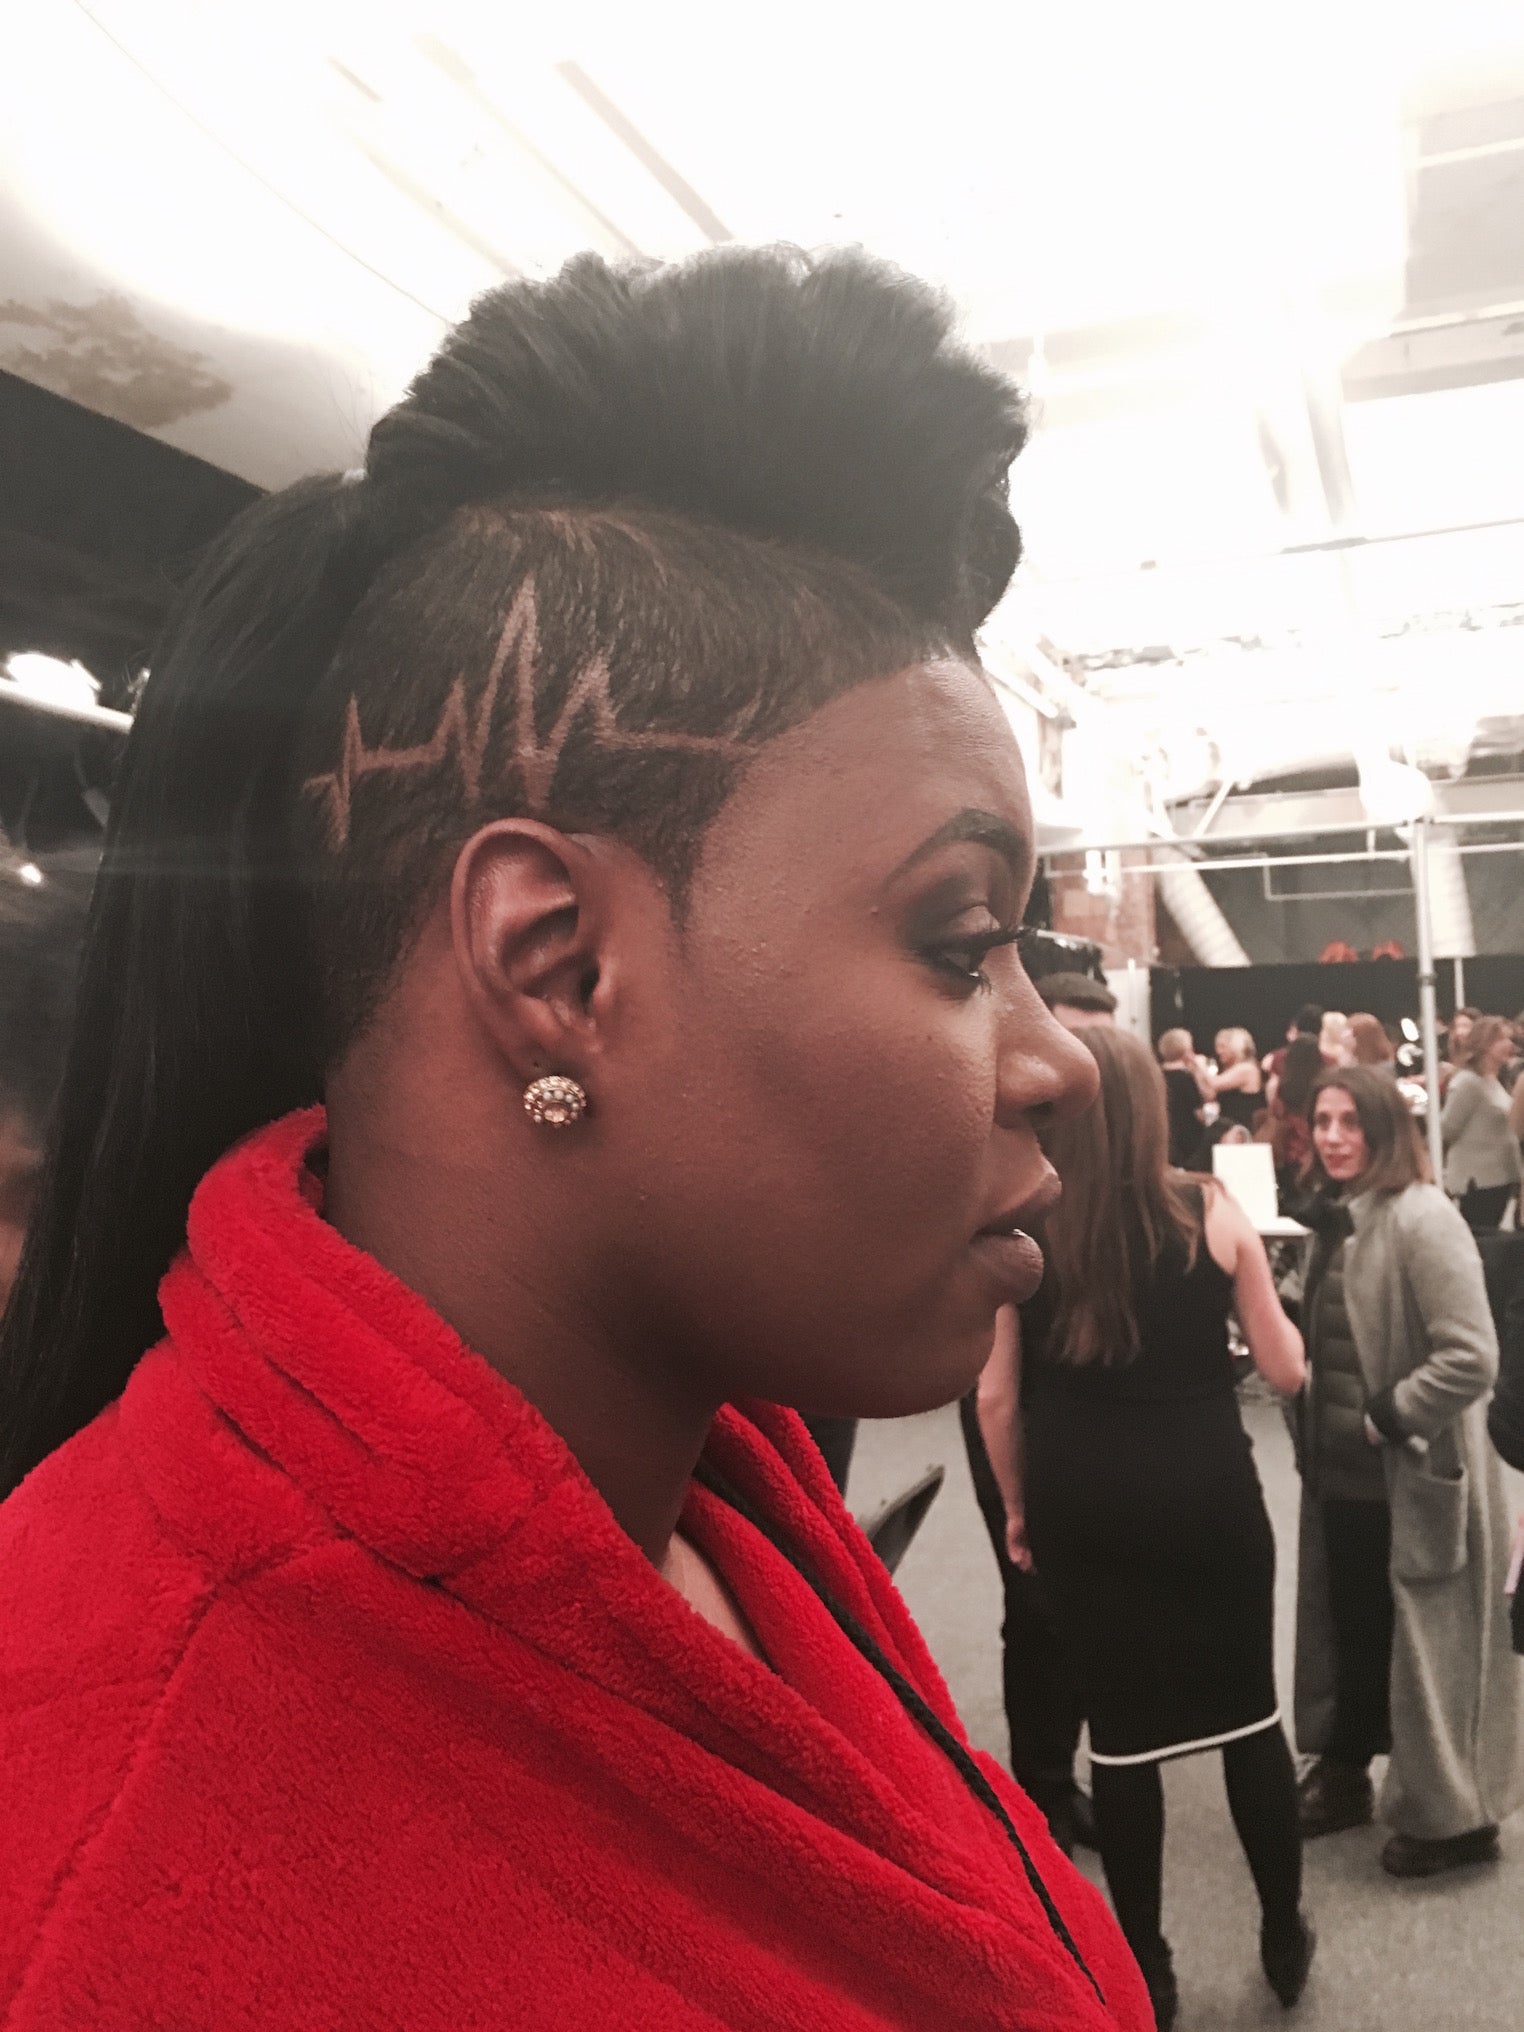 'Empire’s' Ta'Rhonda Jones Wears Shaved Heartbeat on Head For Go Red for Women Dress Show
